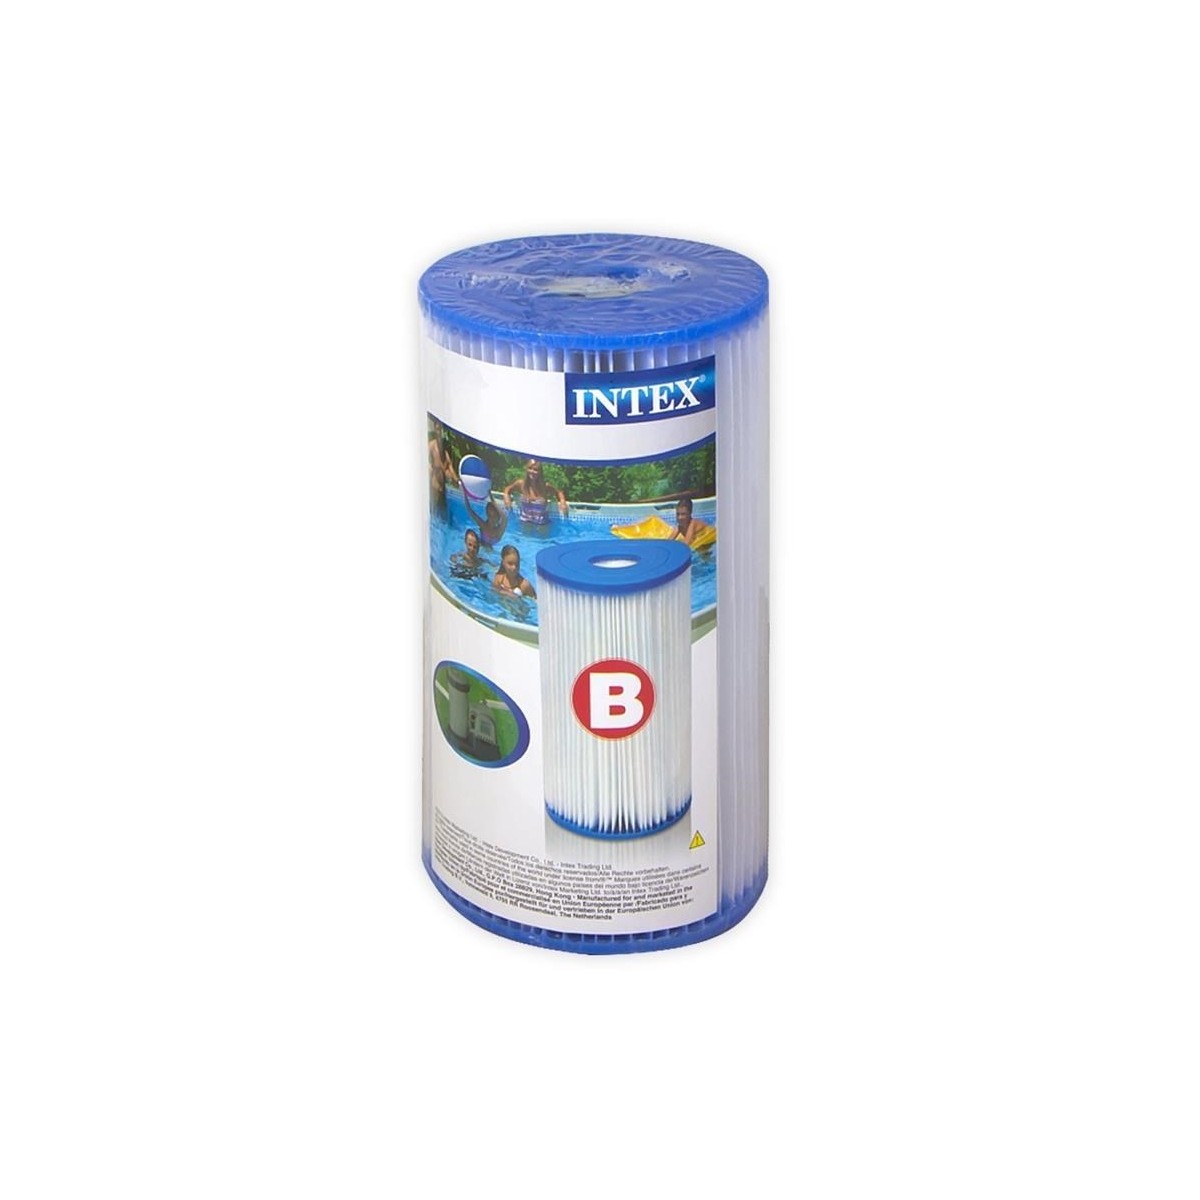 Large Intex filter cartridge